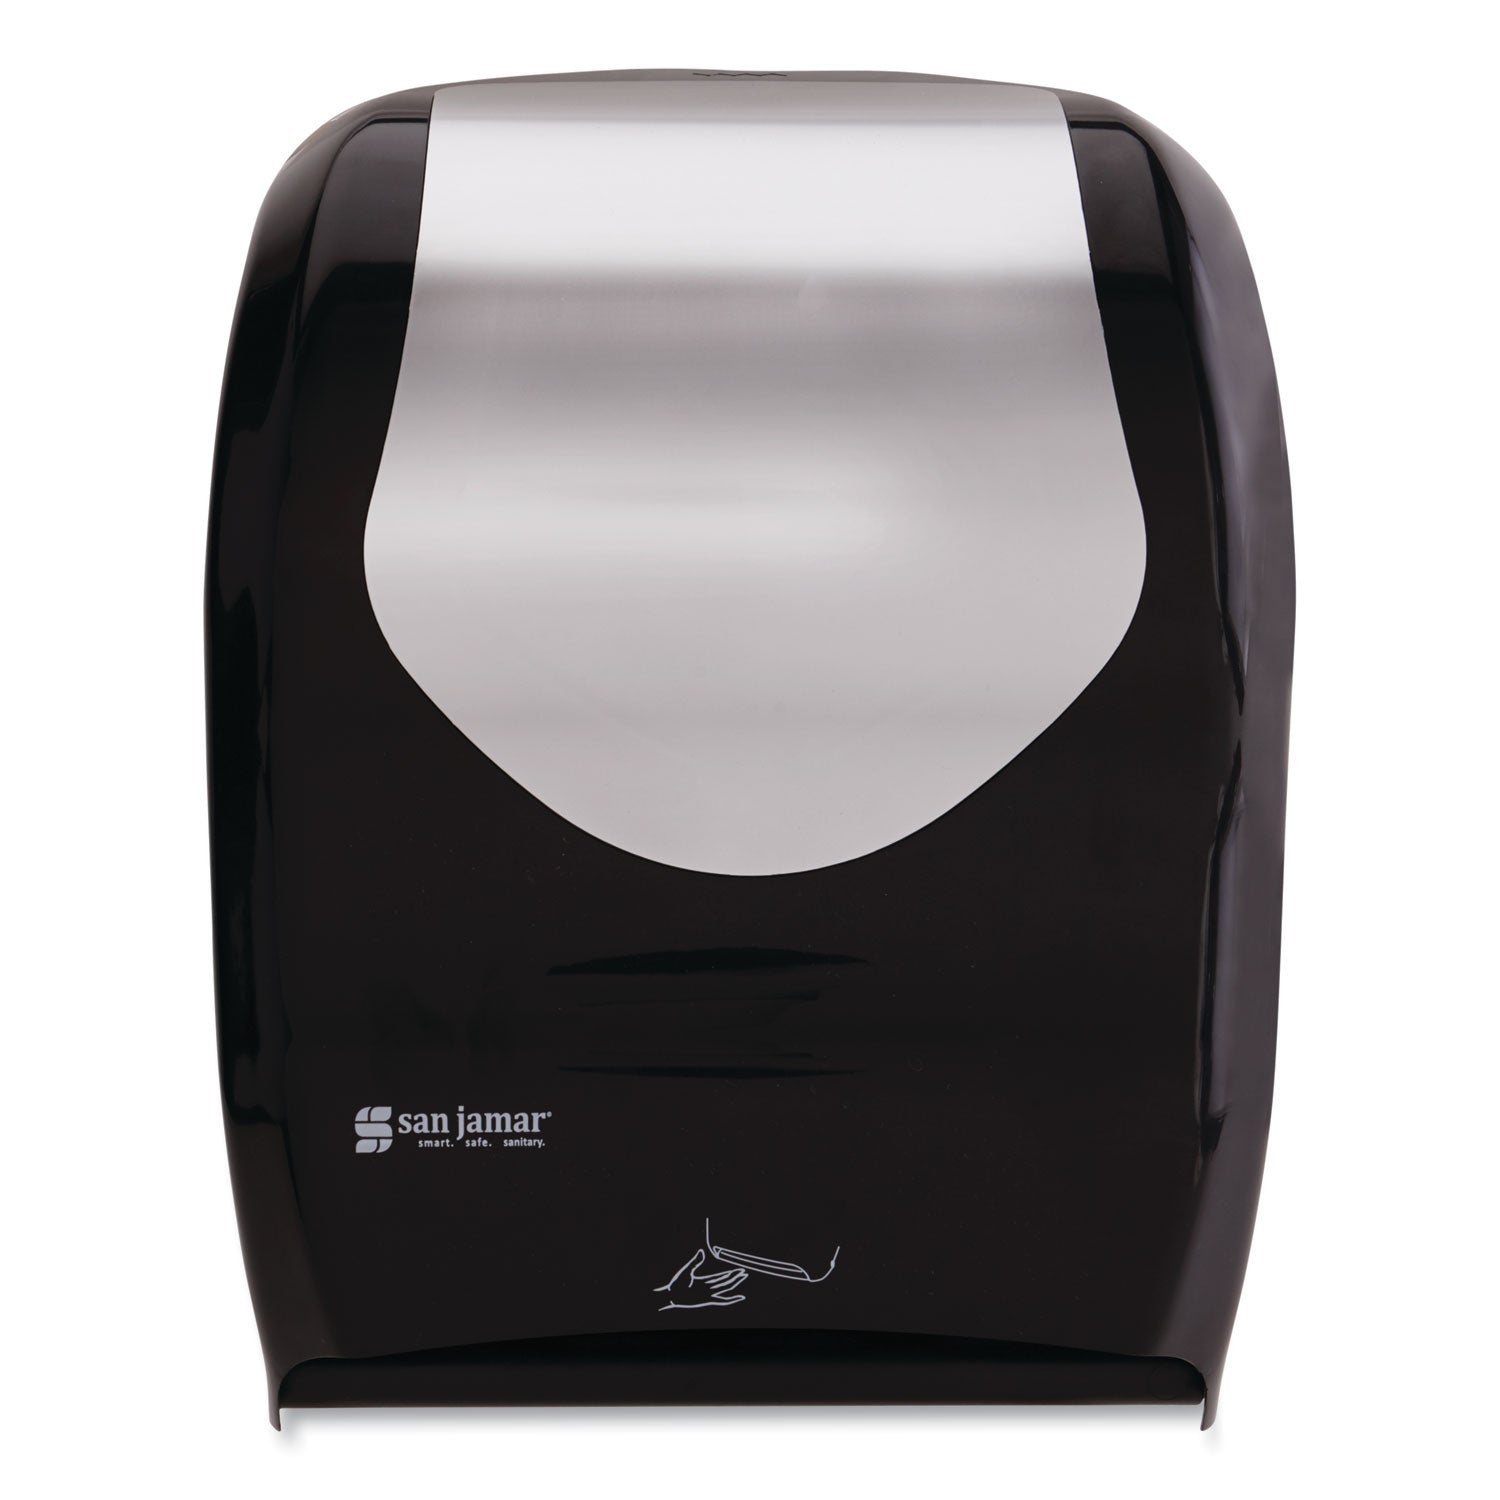 smart-system-with-iq-sensor-towel-dispenser-165-x-975-x-12-black-silver_sjmt1470bkss - 1